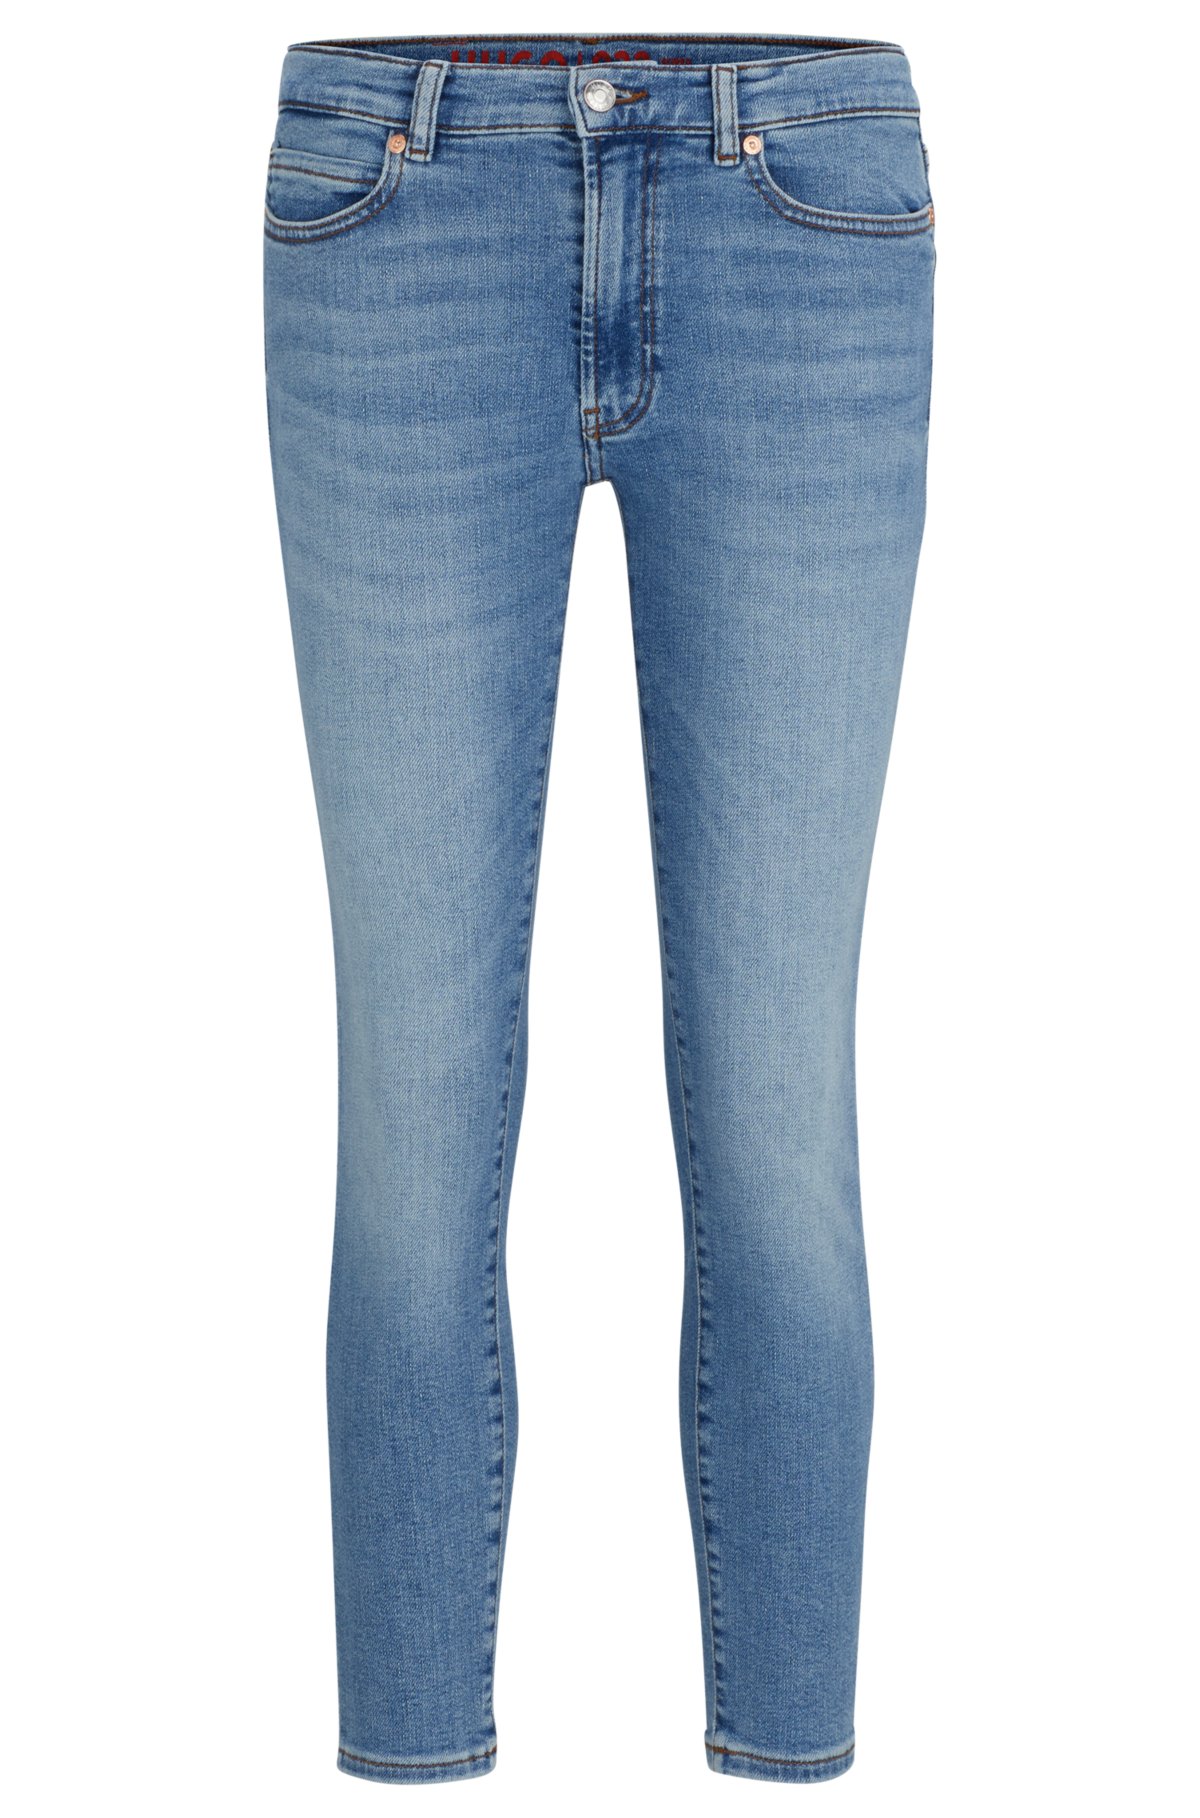 HUGO - Skinny-fit jeans in blue stretch denim